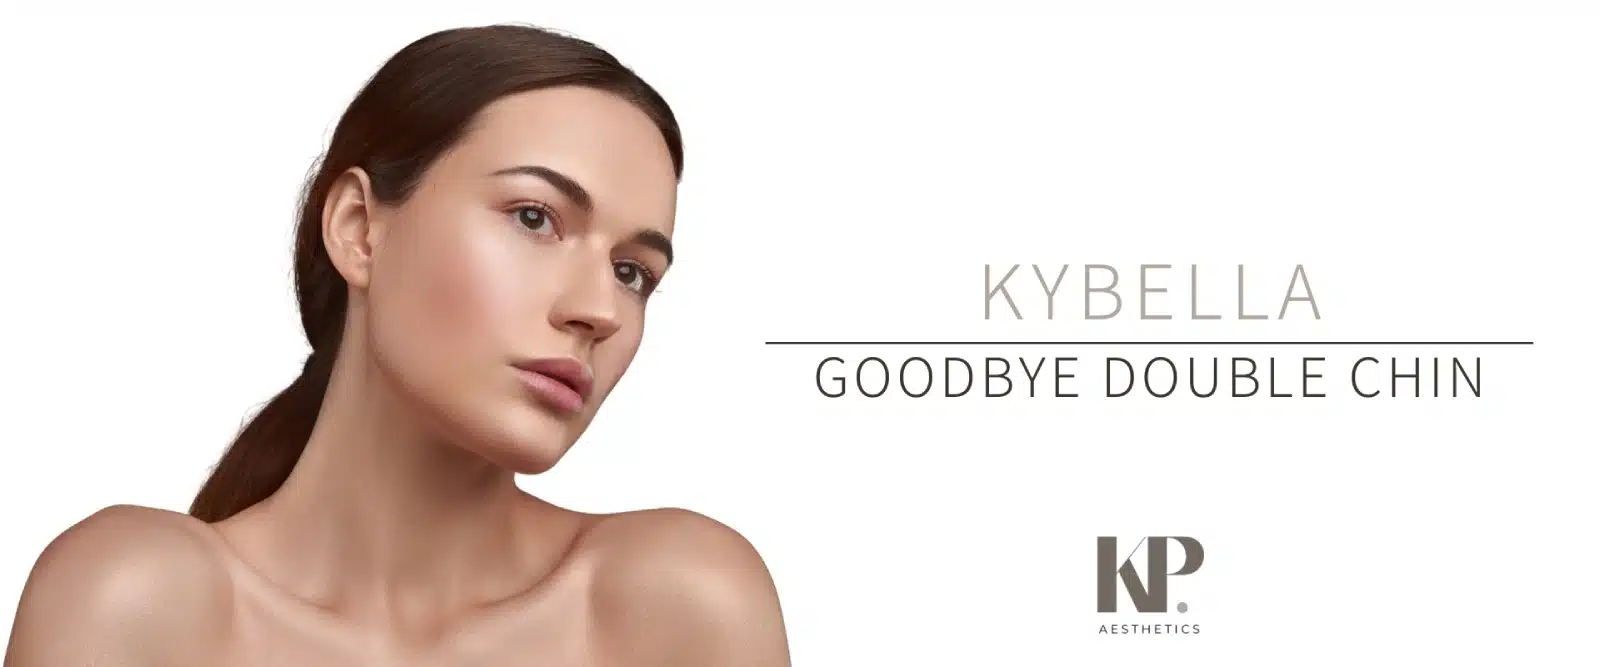 Kybella - Goodbye Double Chin - KP Aesthetics